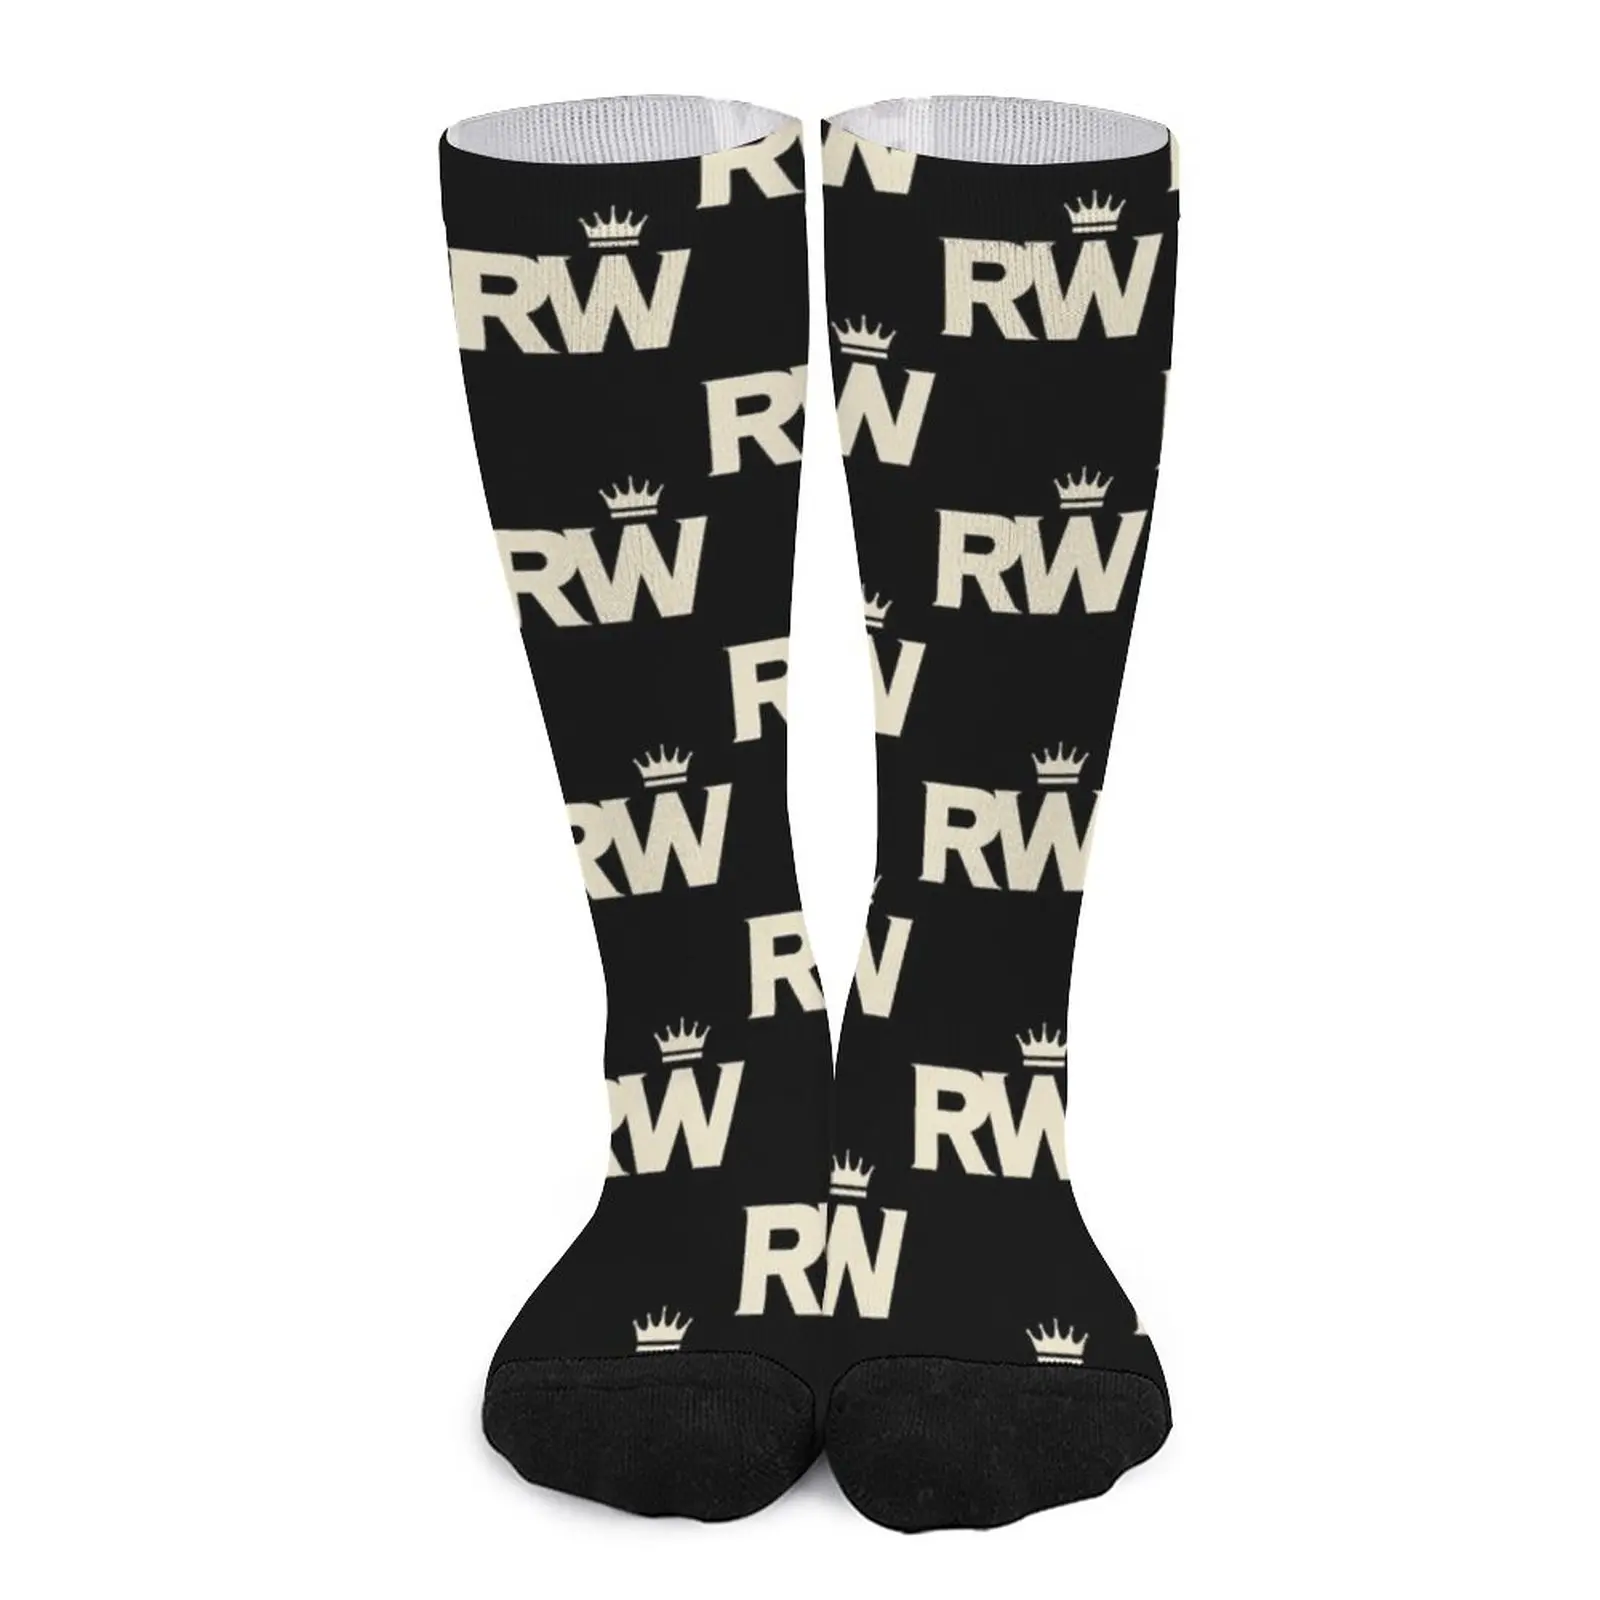 Robbie Williams . classique Socks Man socks new in Men's socks gym socks baroque academie williams christie le jardin des voix